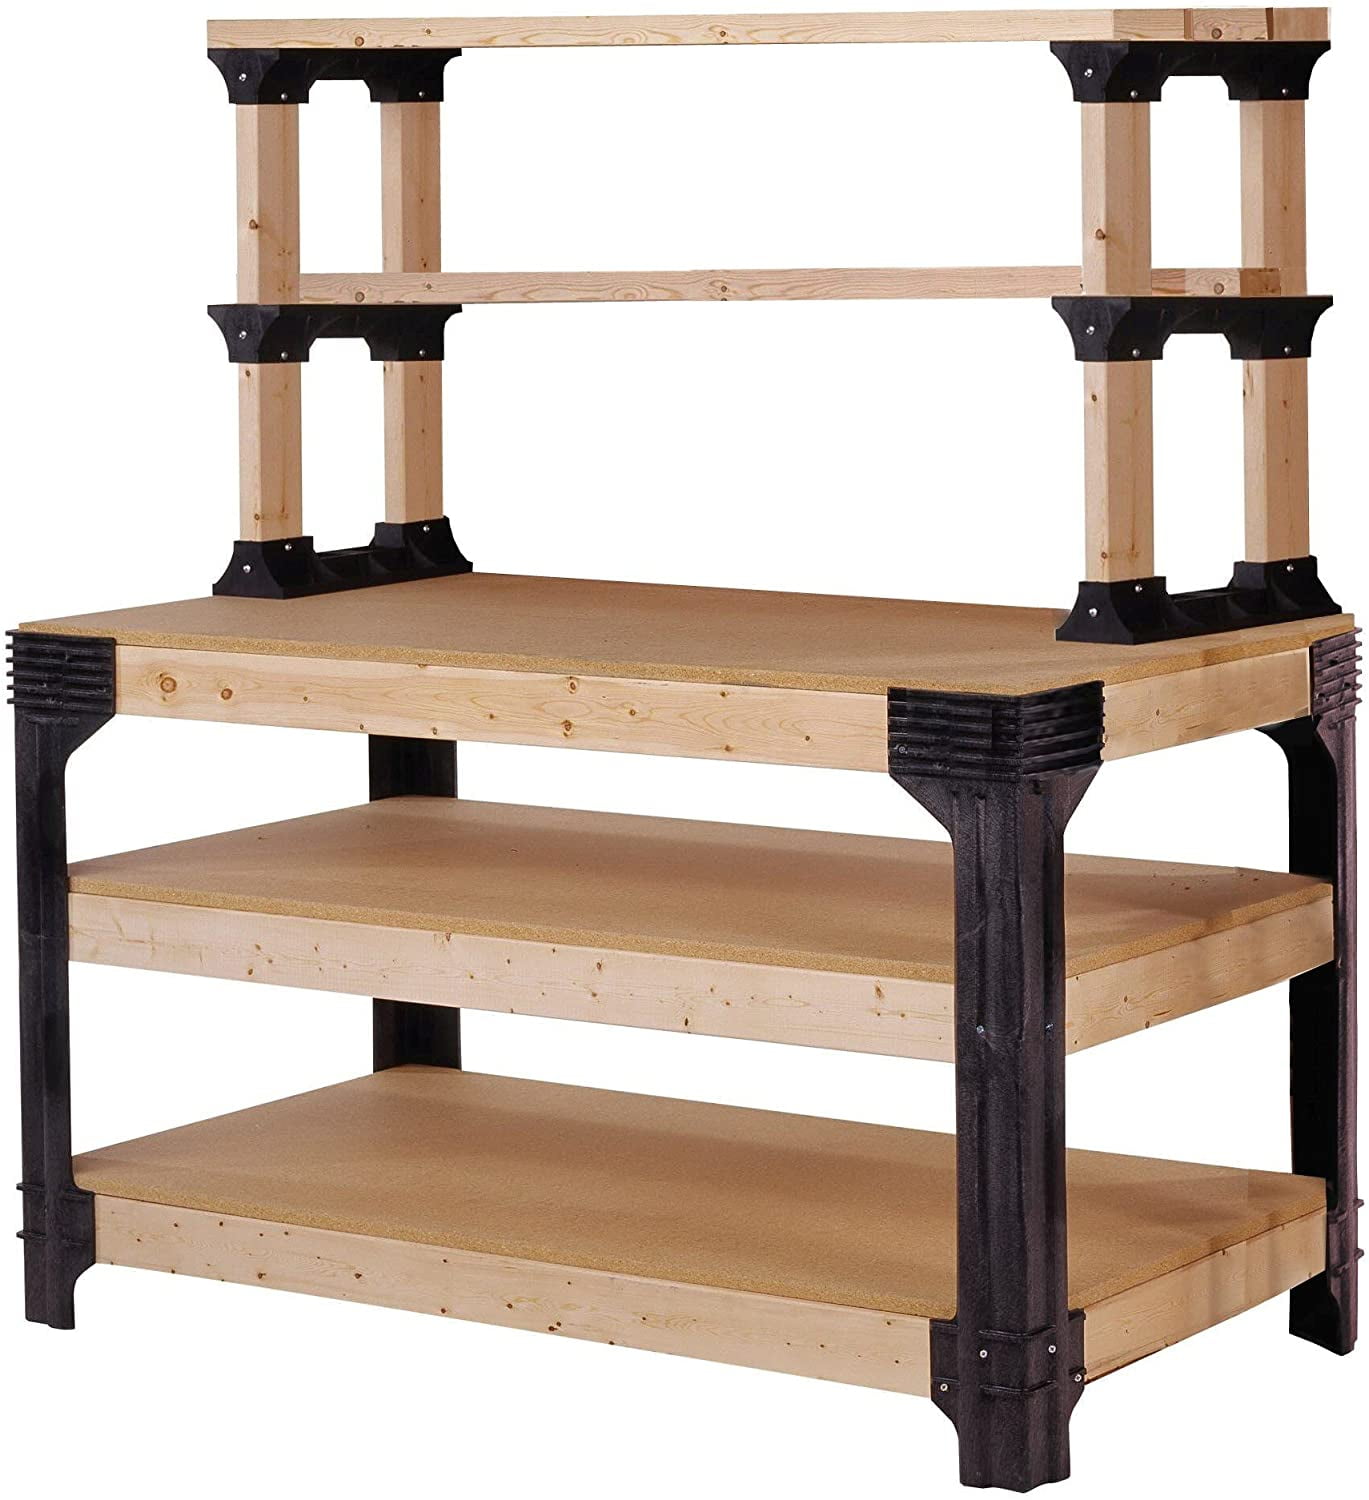 2x4 Basics Workbench Kit Garage Storage Table Tools Shelf DIY Workshop Bench New 